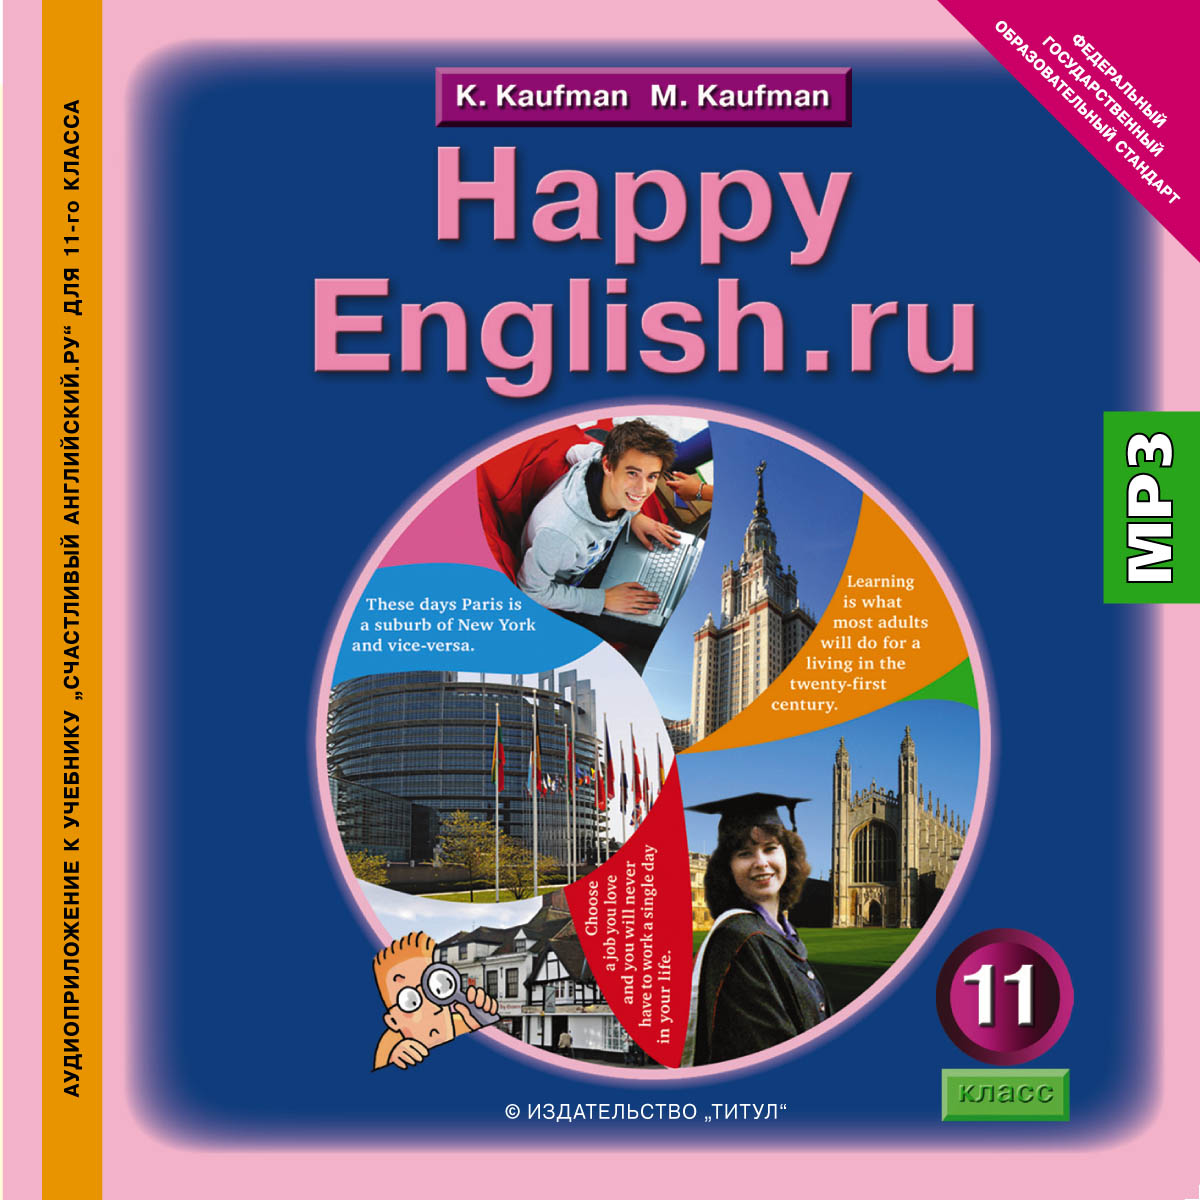 New english ru